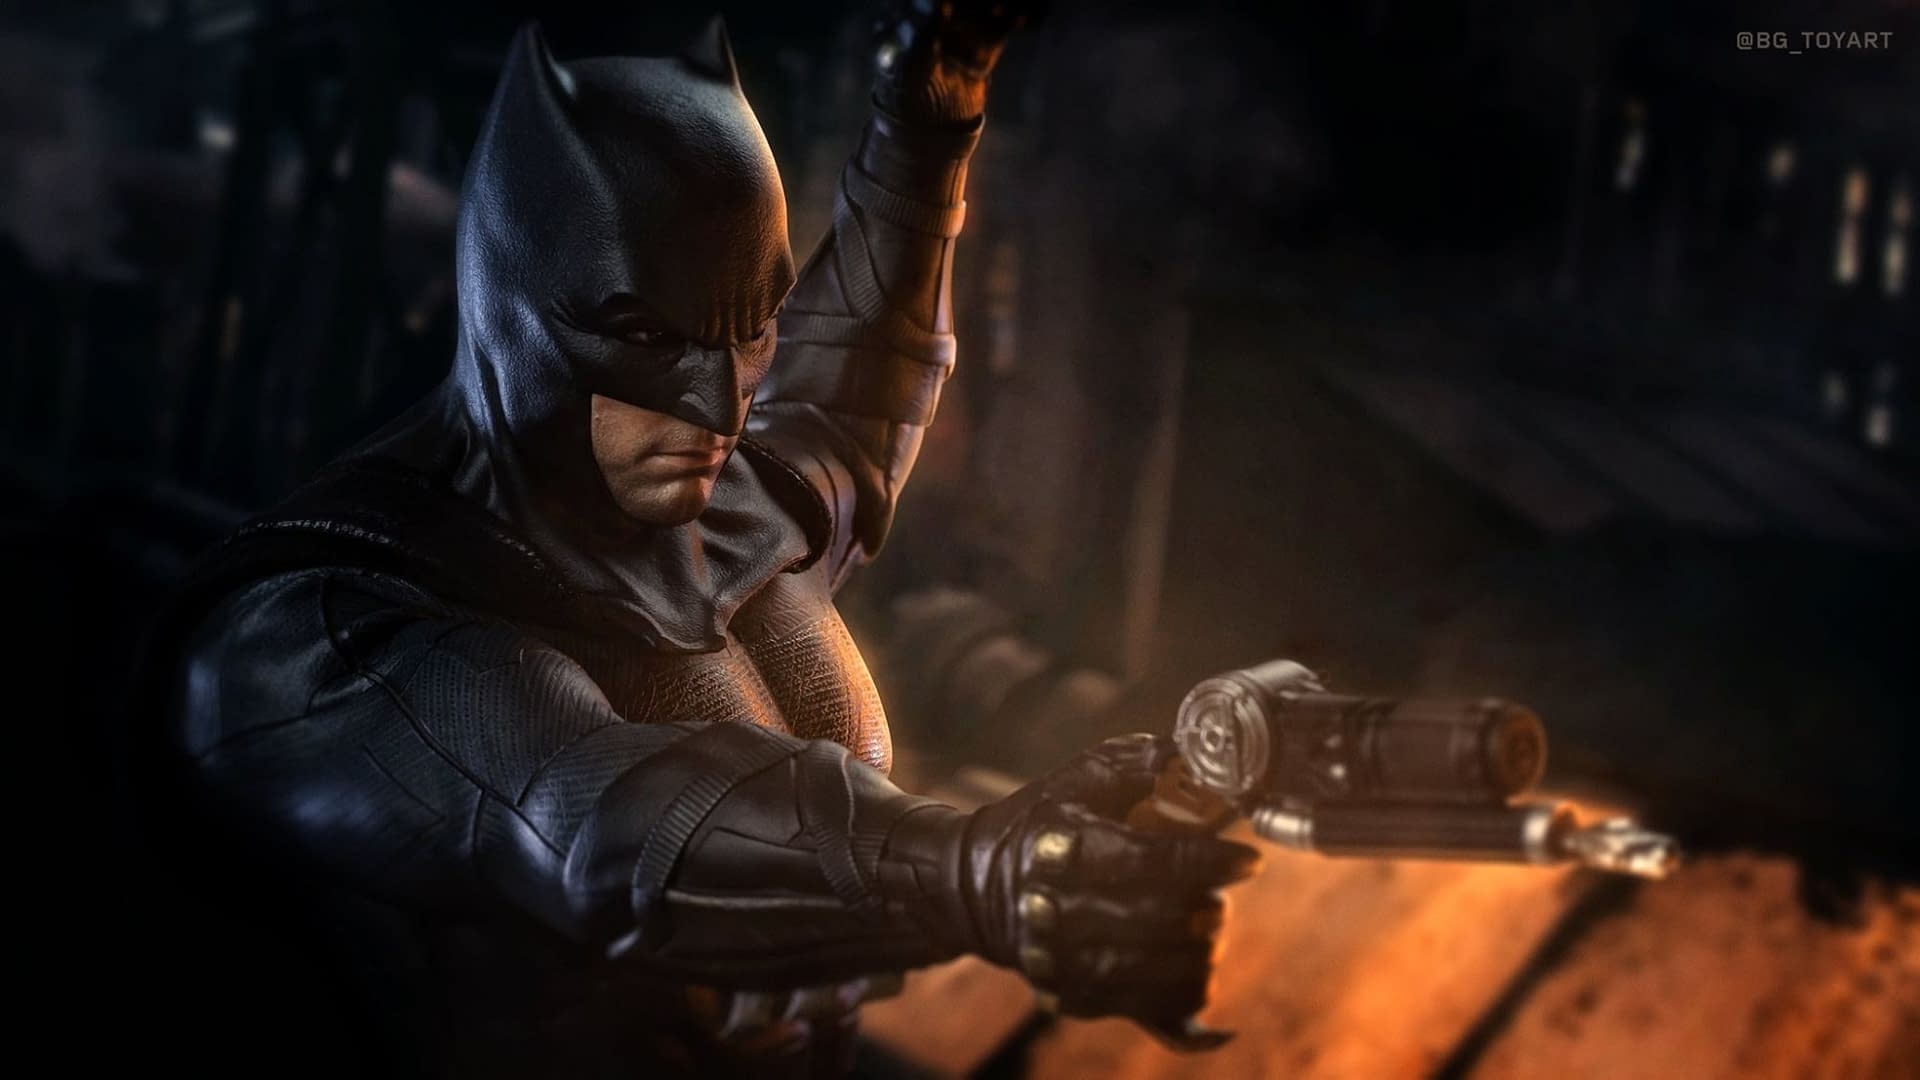 Hot Toys Shows Final Product for Justice League Batman